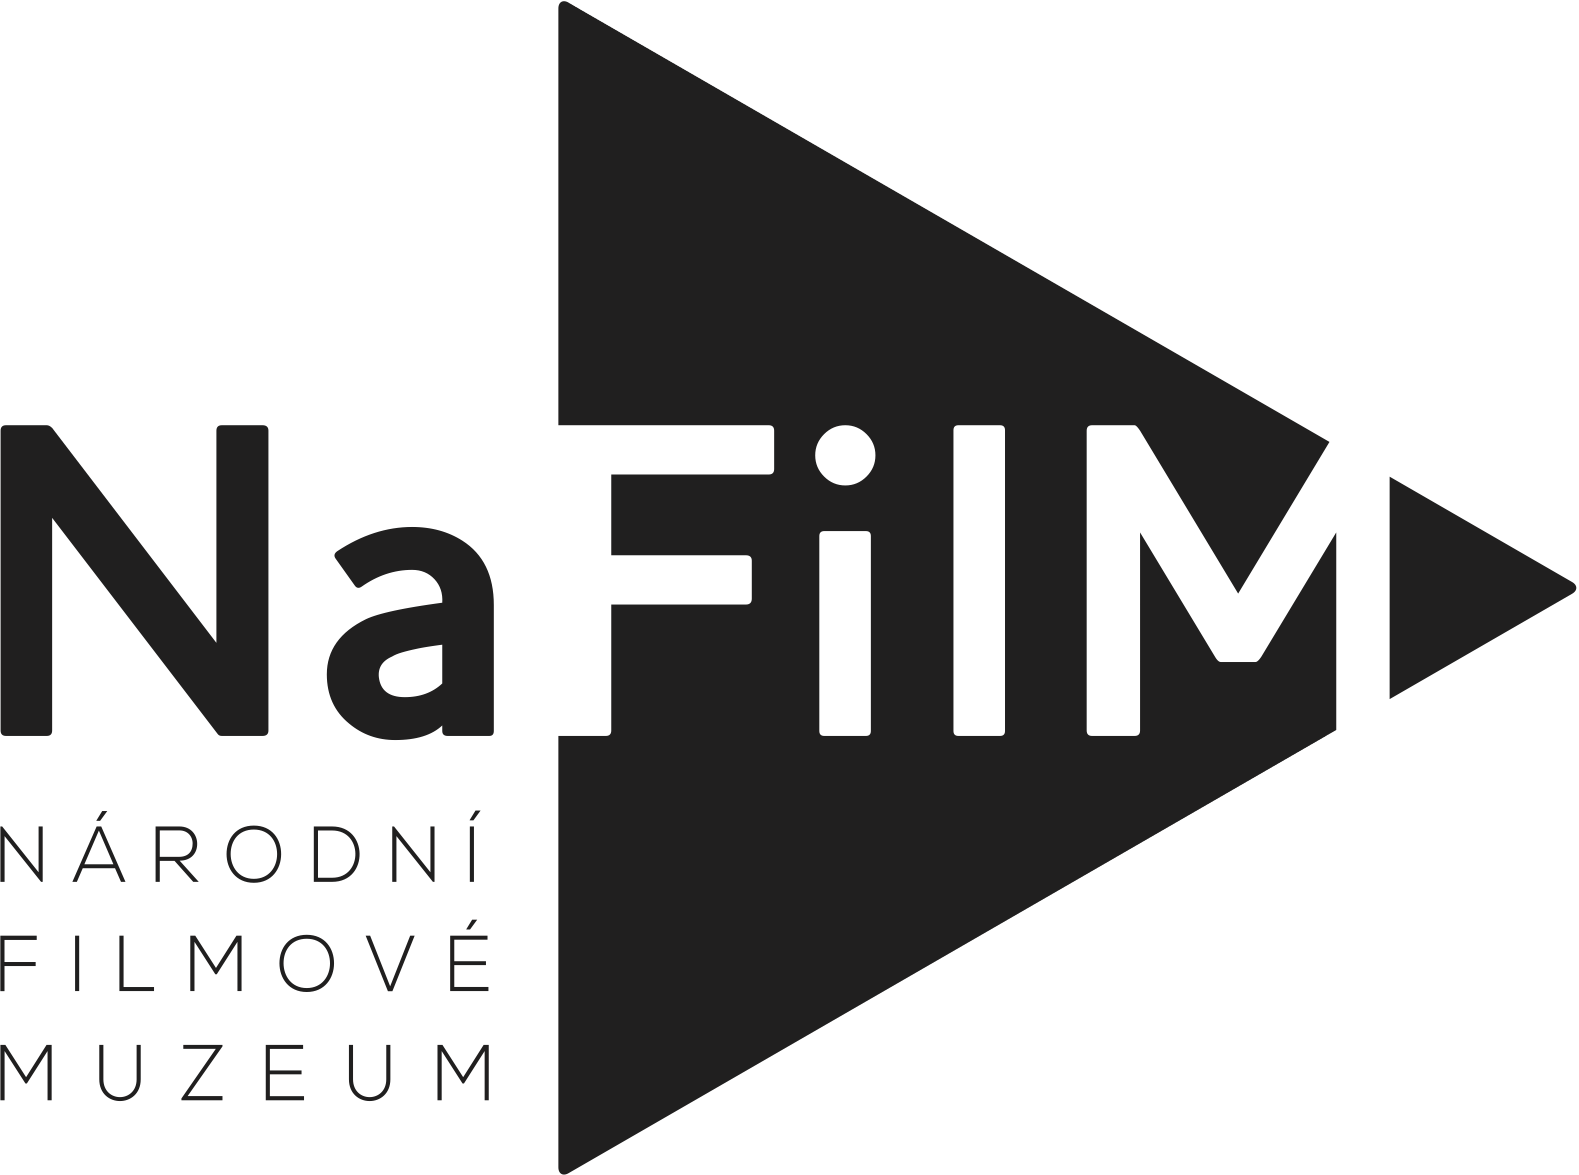 NaFilm